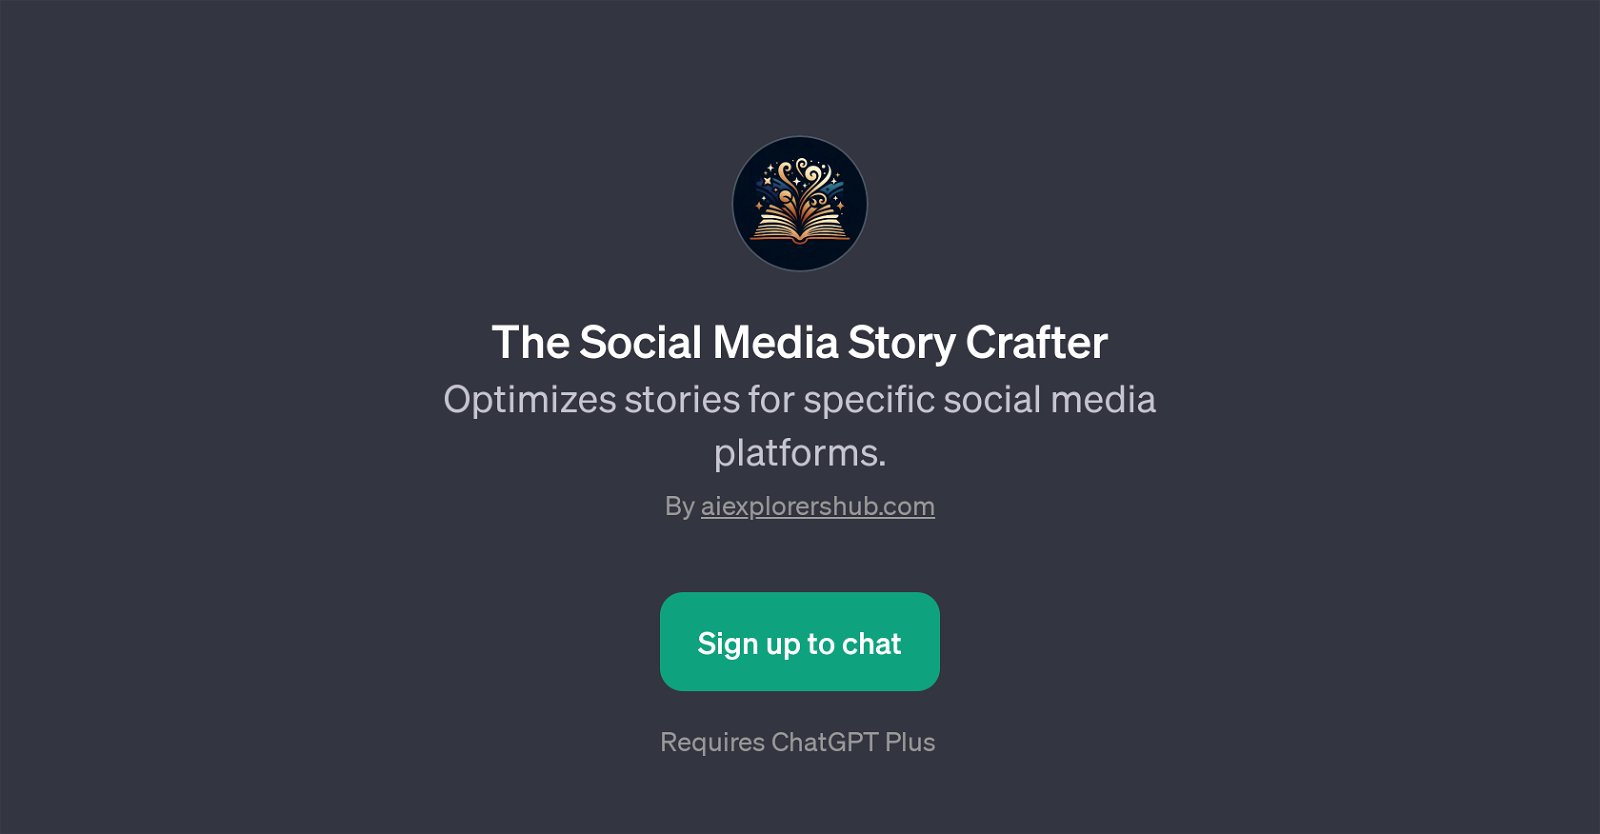 The Social Media Story Crafter website